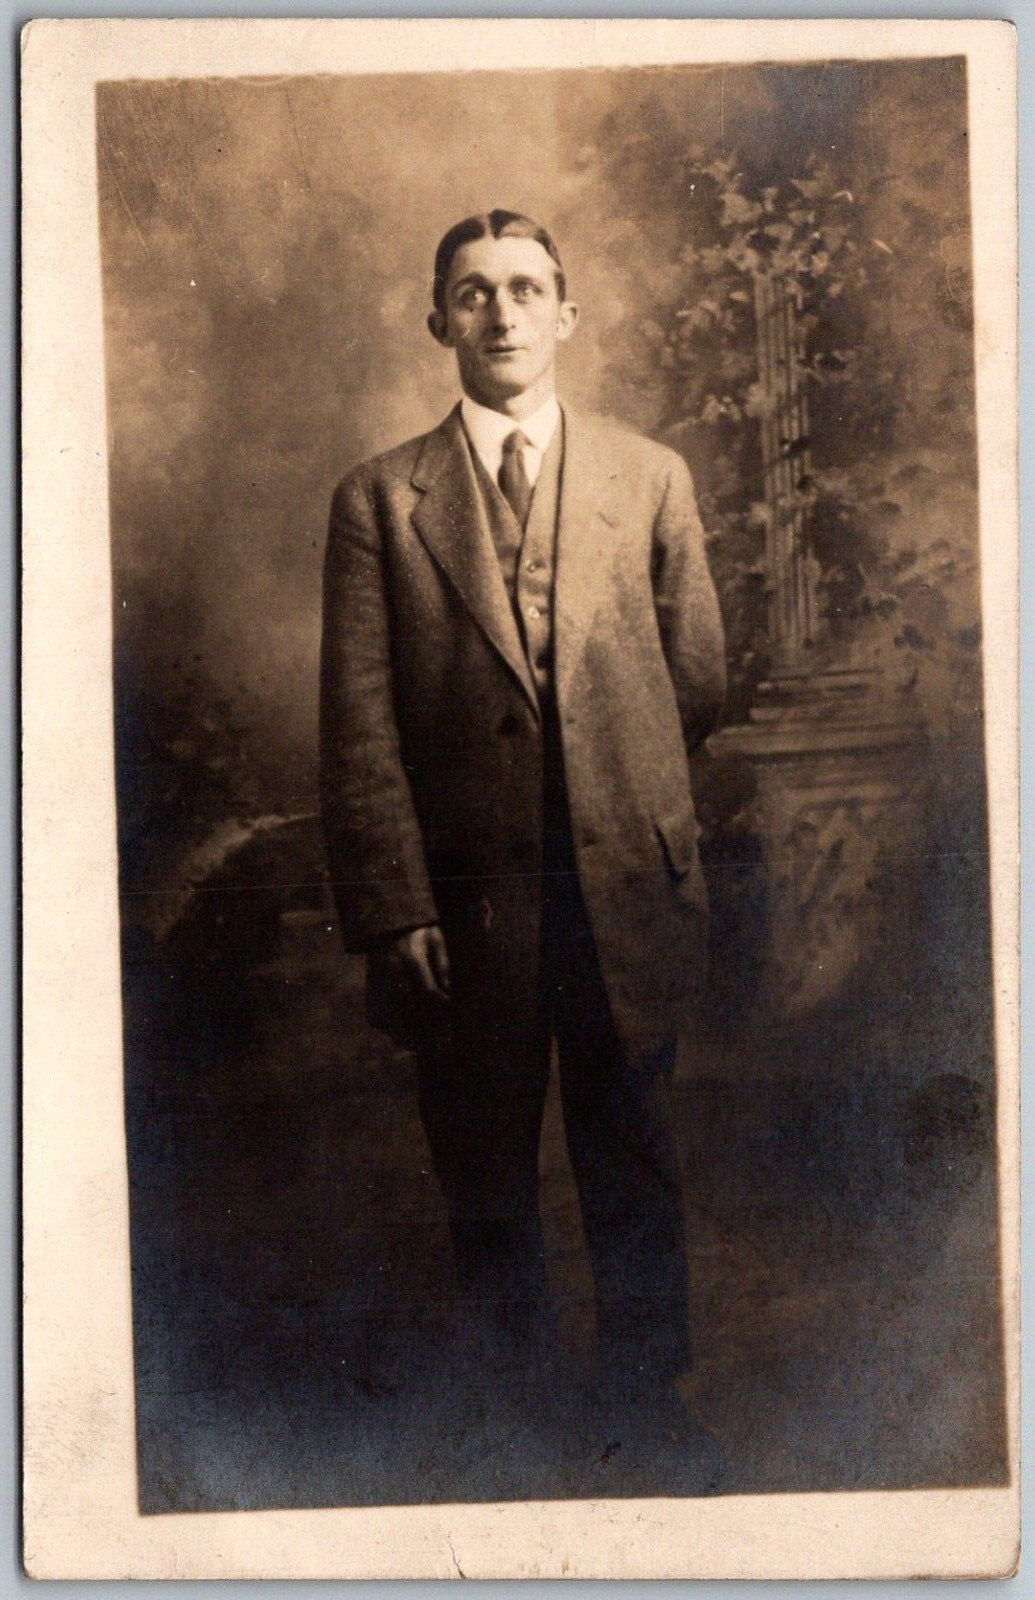 c1908 RPPC Real Photo Postcard Standing Man Suit Tie Vest